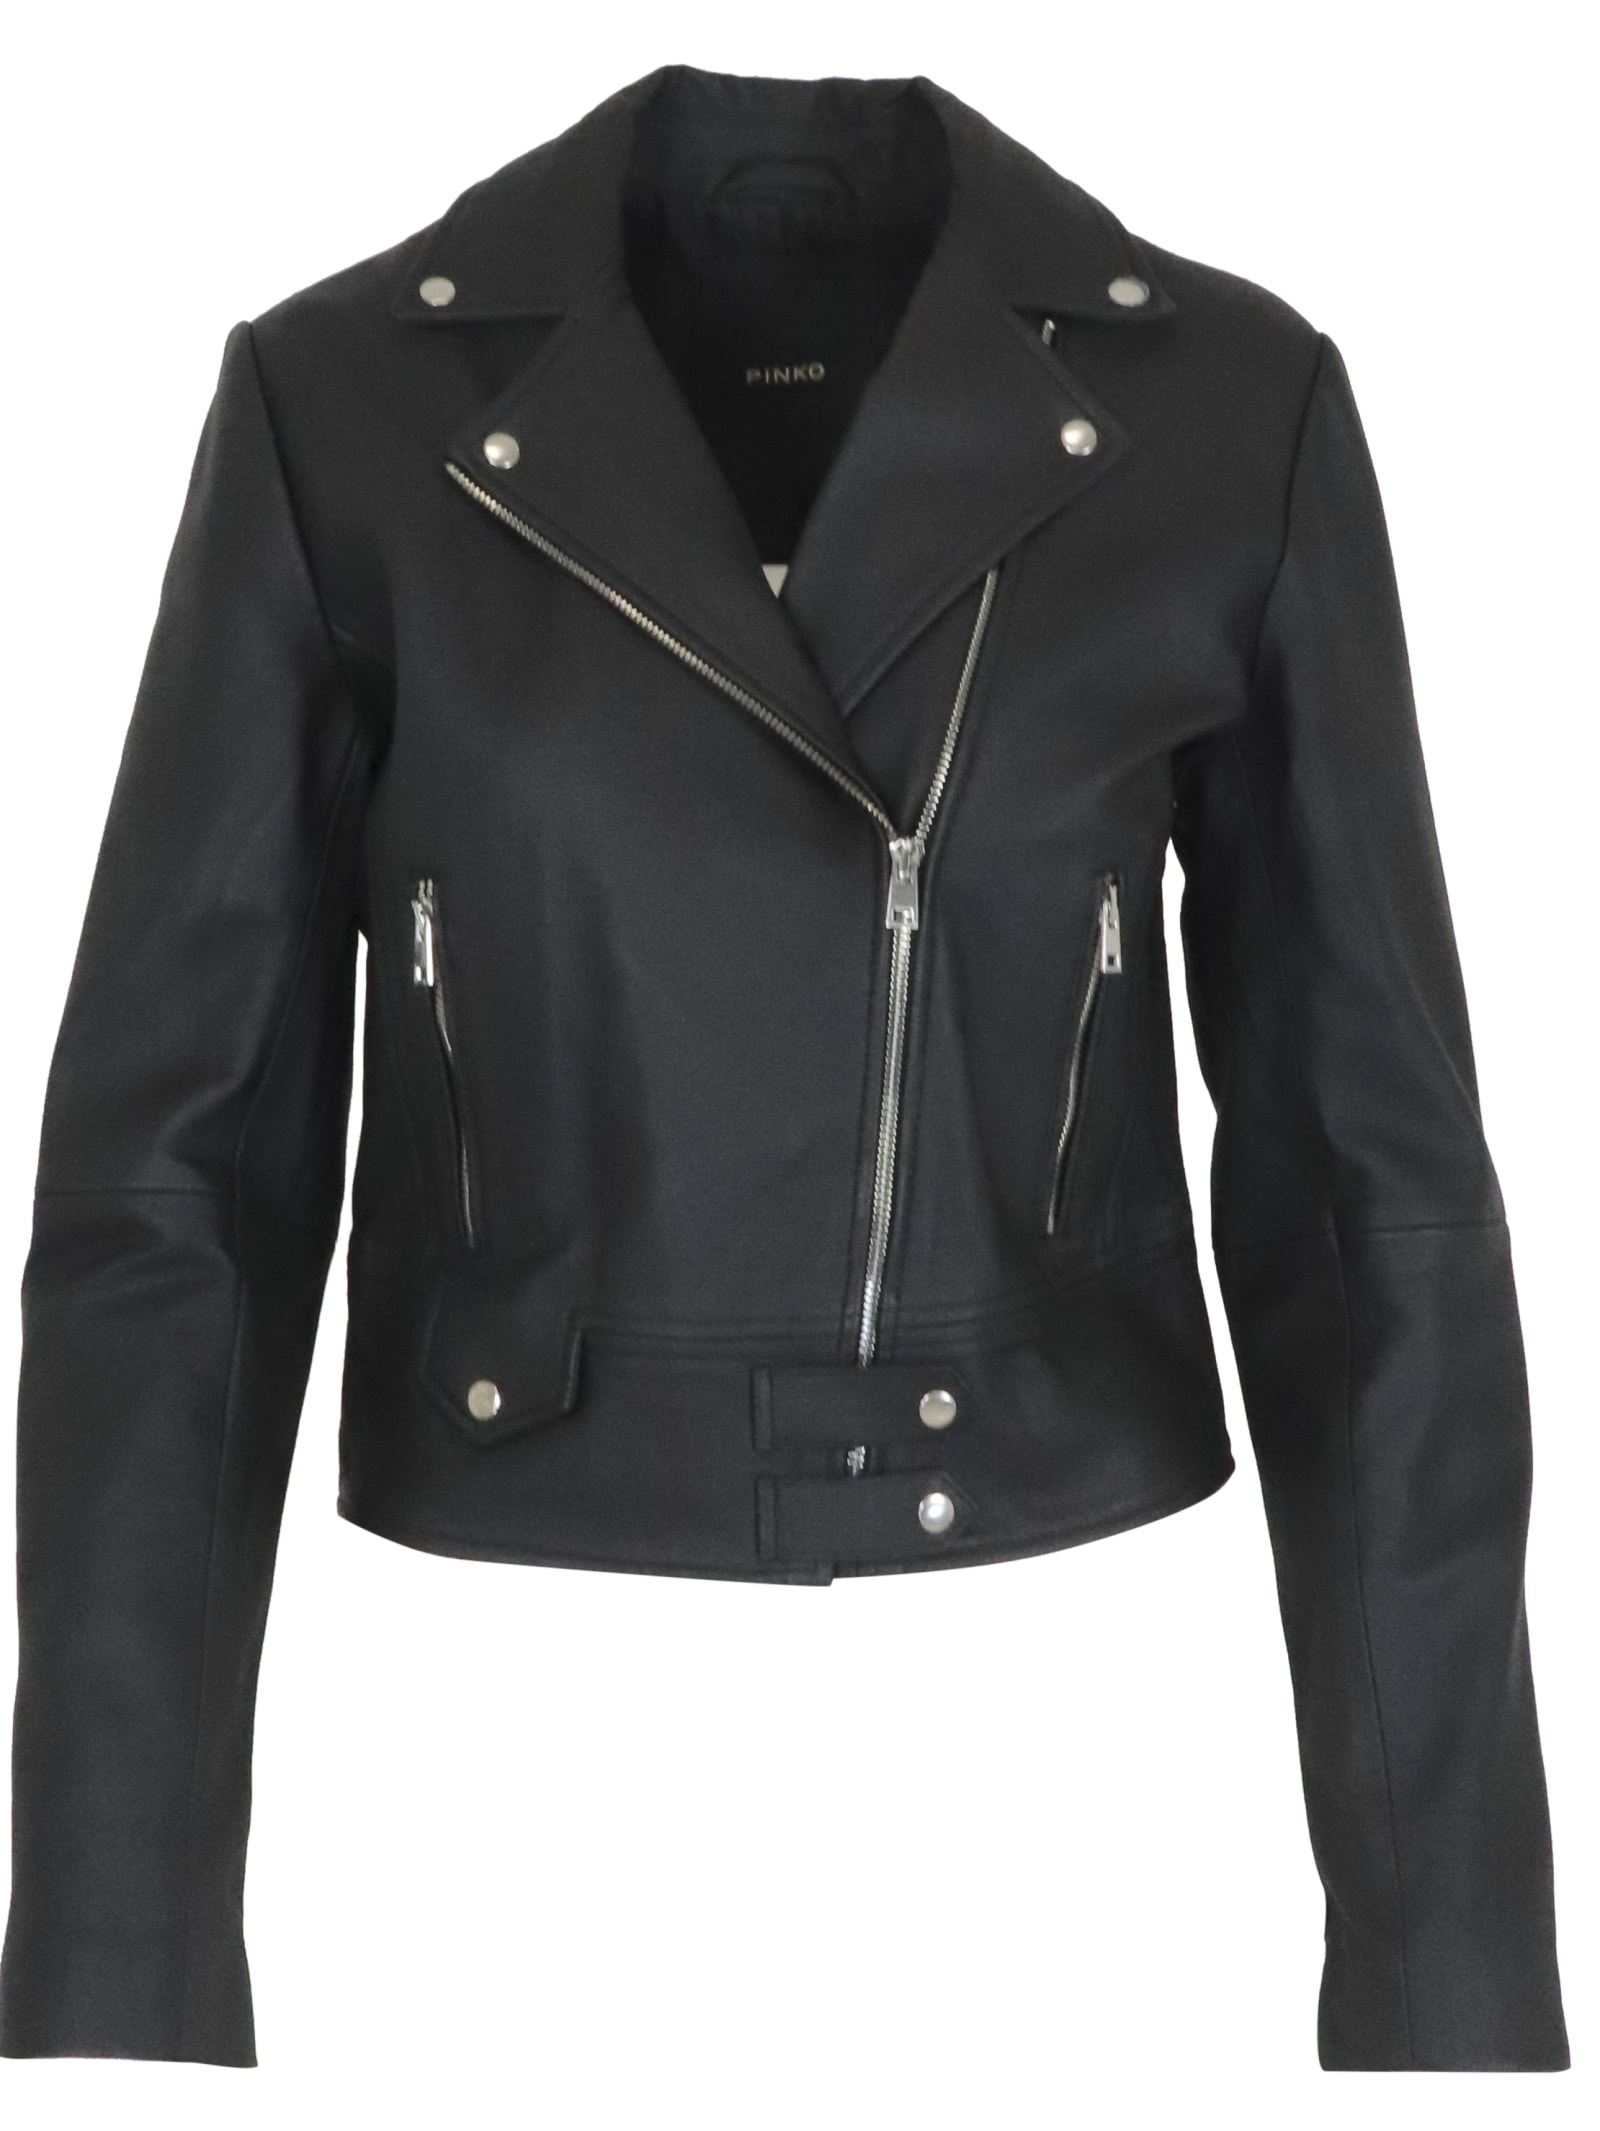 Pinko Sensibile 11 Leather Jacket